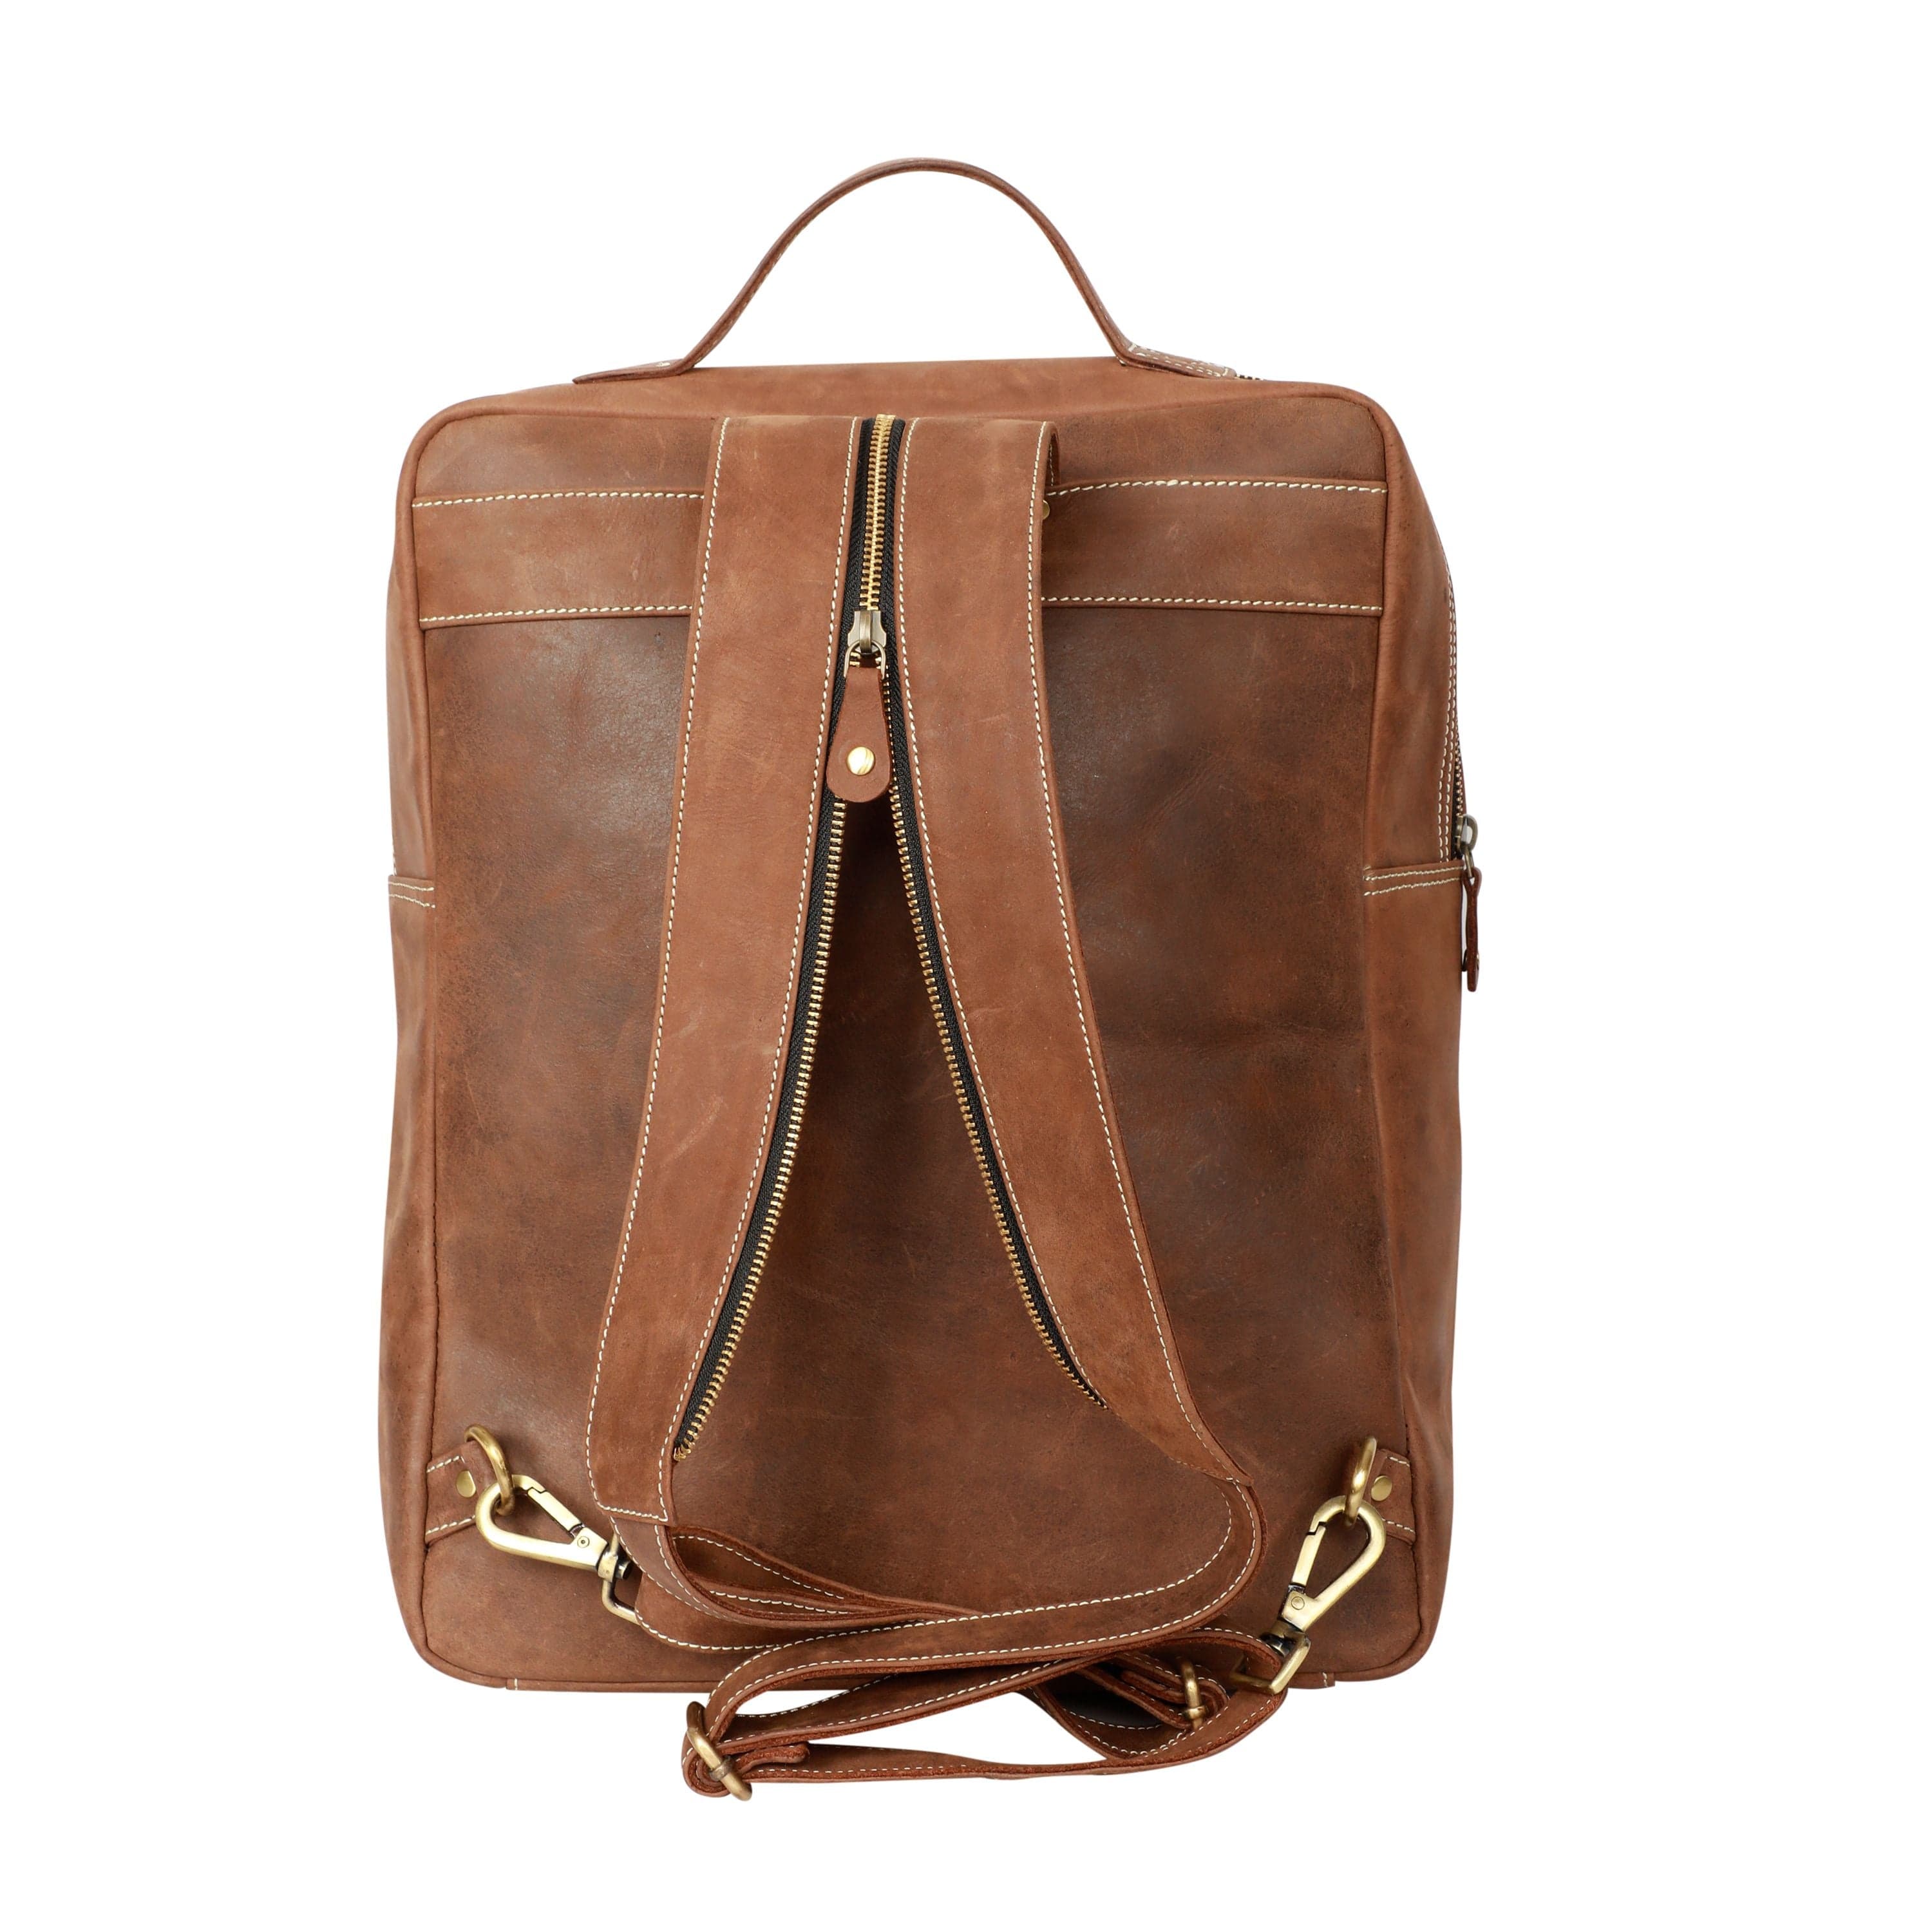 kinnoti LAPTOP BAGS Leather Backpack